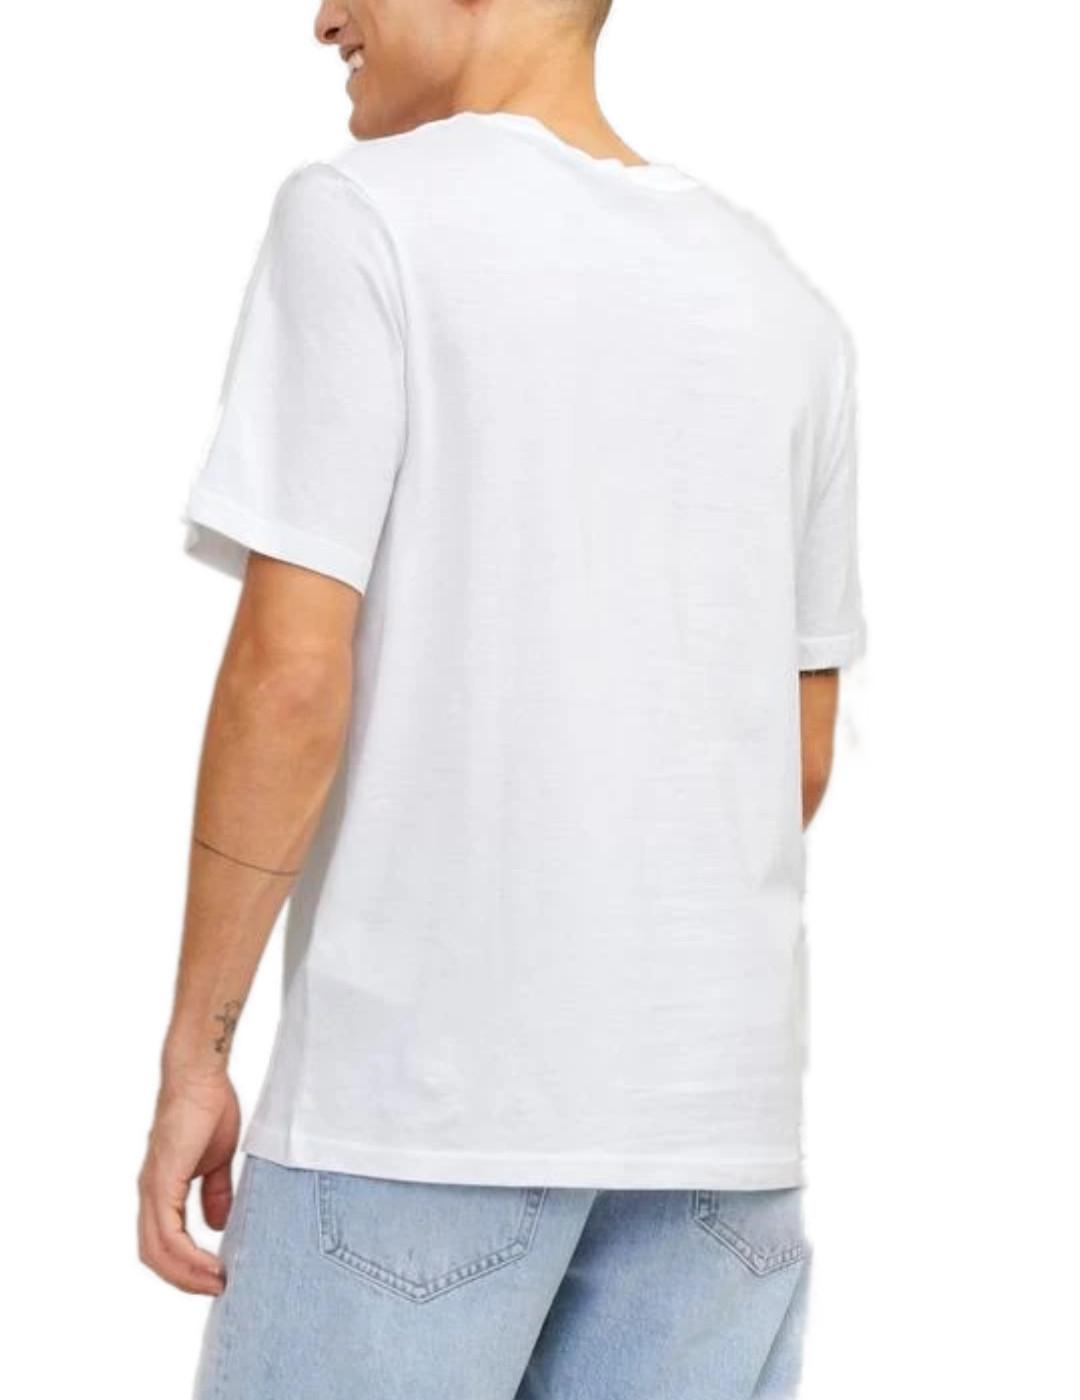 Camiseta Jack&Jones Cobin blanco manga corta para hombre